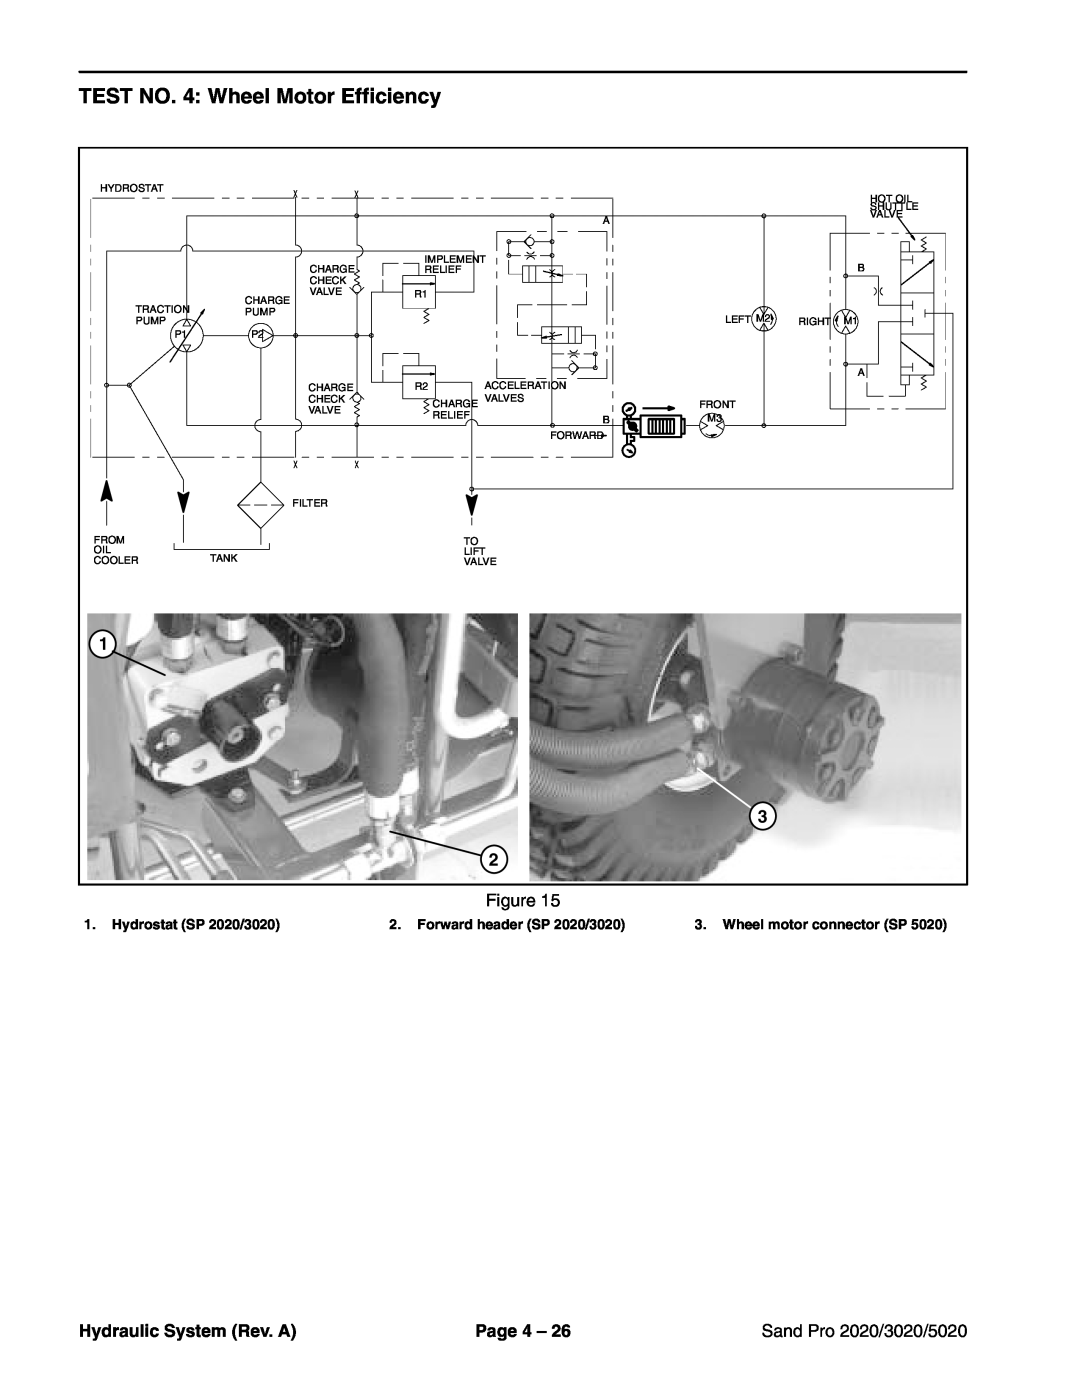 Toro service manual TEST NO. 4 Wheel Motor Efficiency, Hydraulic System Rev. A, Page 4, Sand Pro 2020/3020/5020 